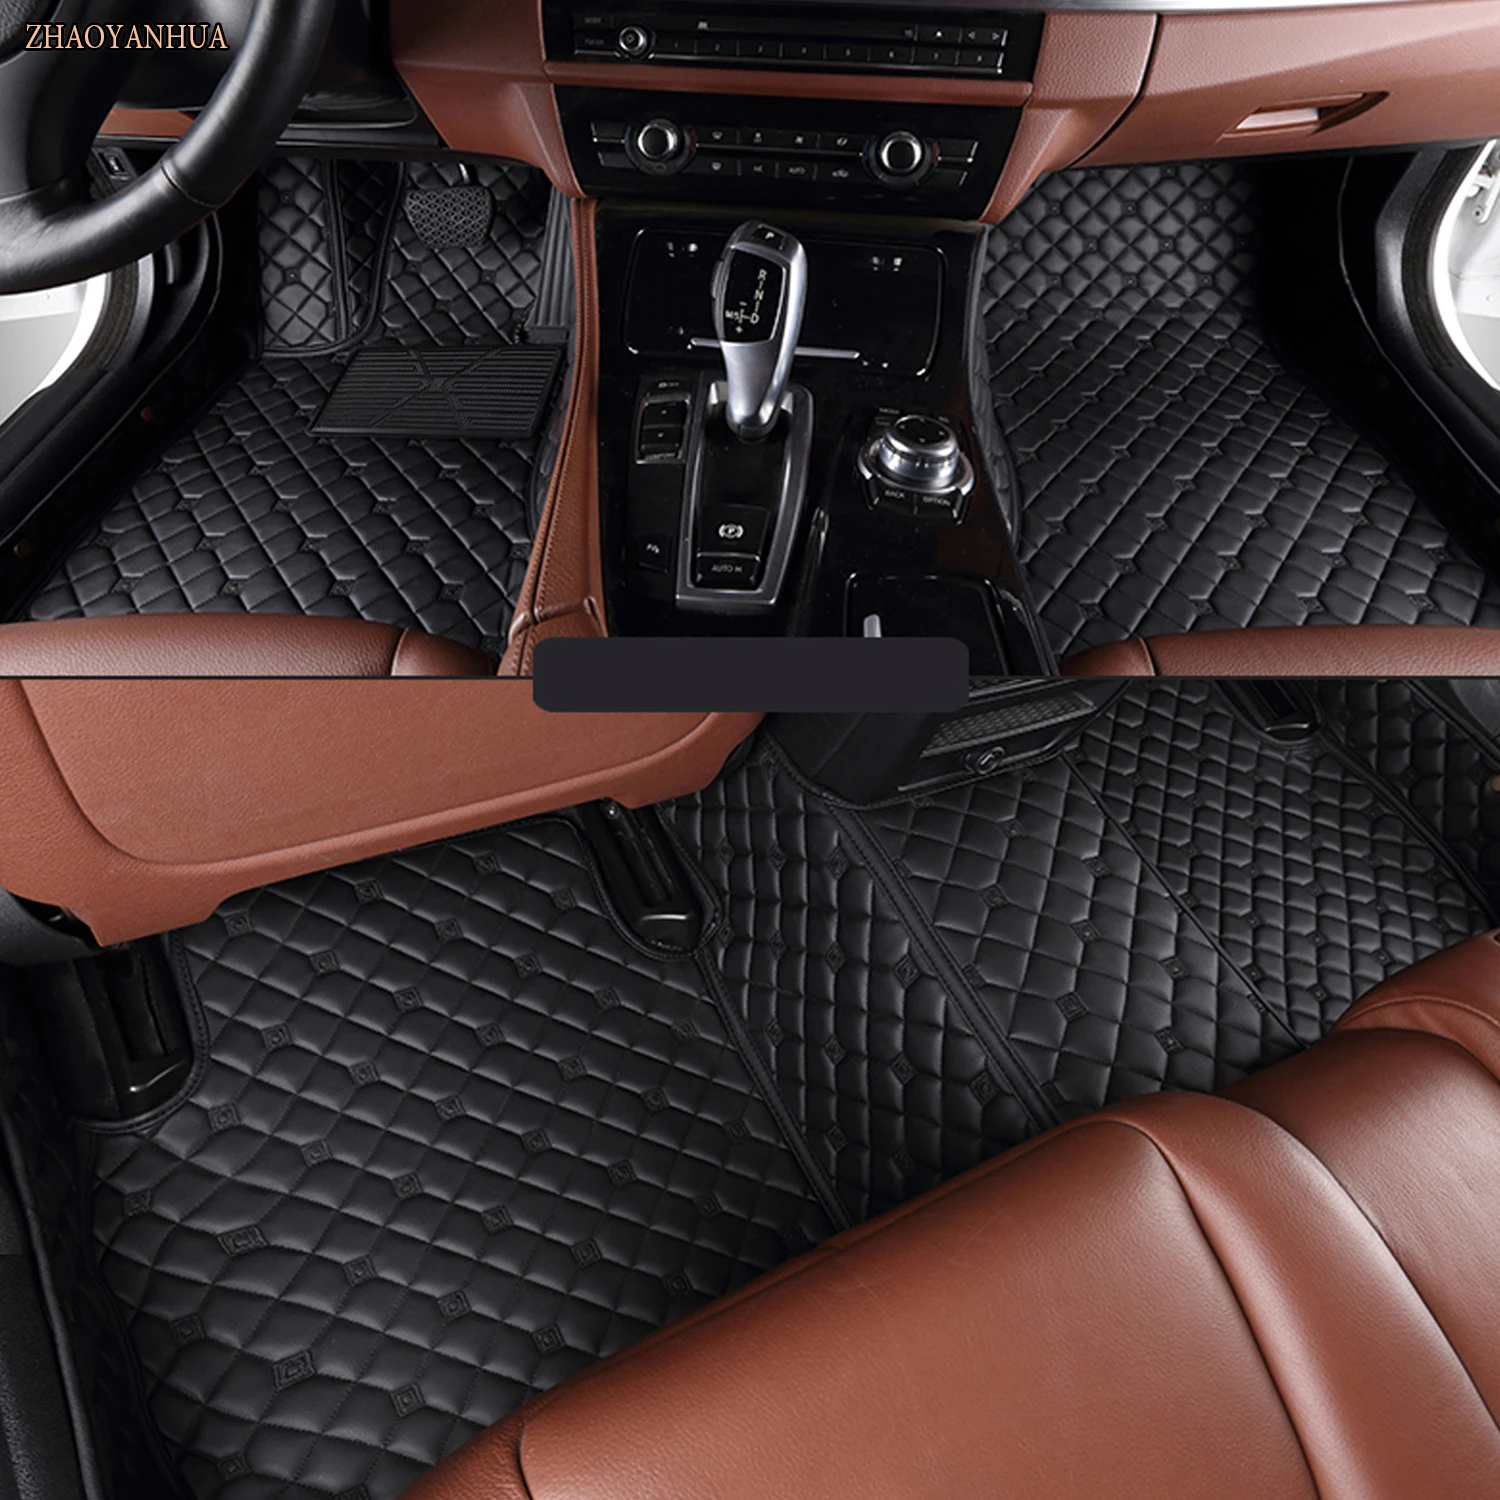 

ZHAOYANHUA car floor mats for BMW 5 series F10 F11 F07 E39 E60 E61 GT 520i 523i 525i 528i car styling high quality carpet rugs